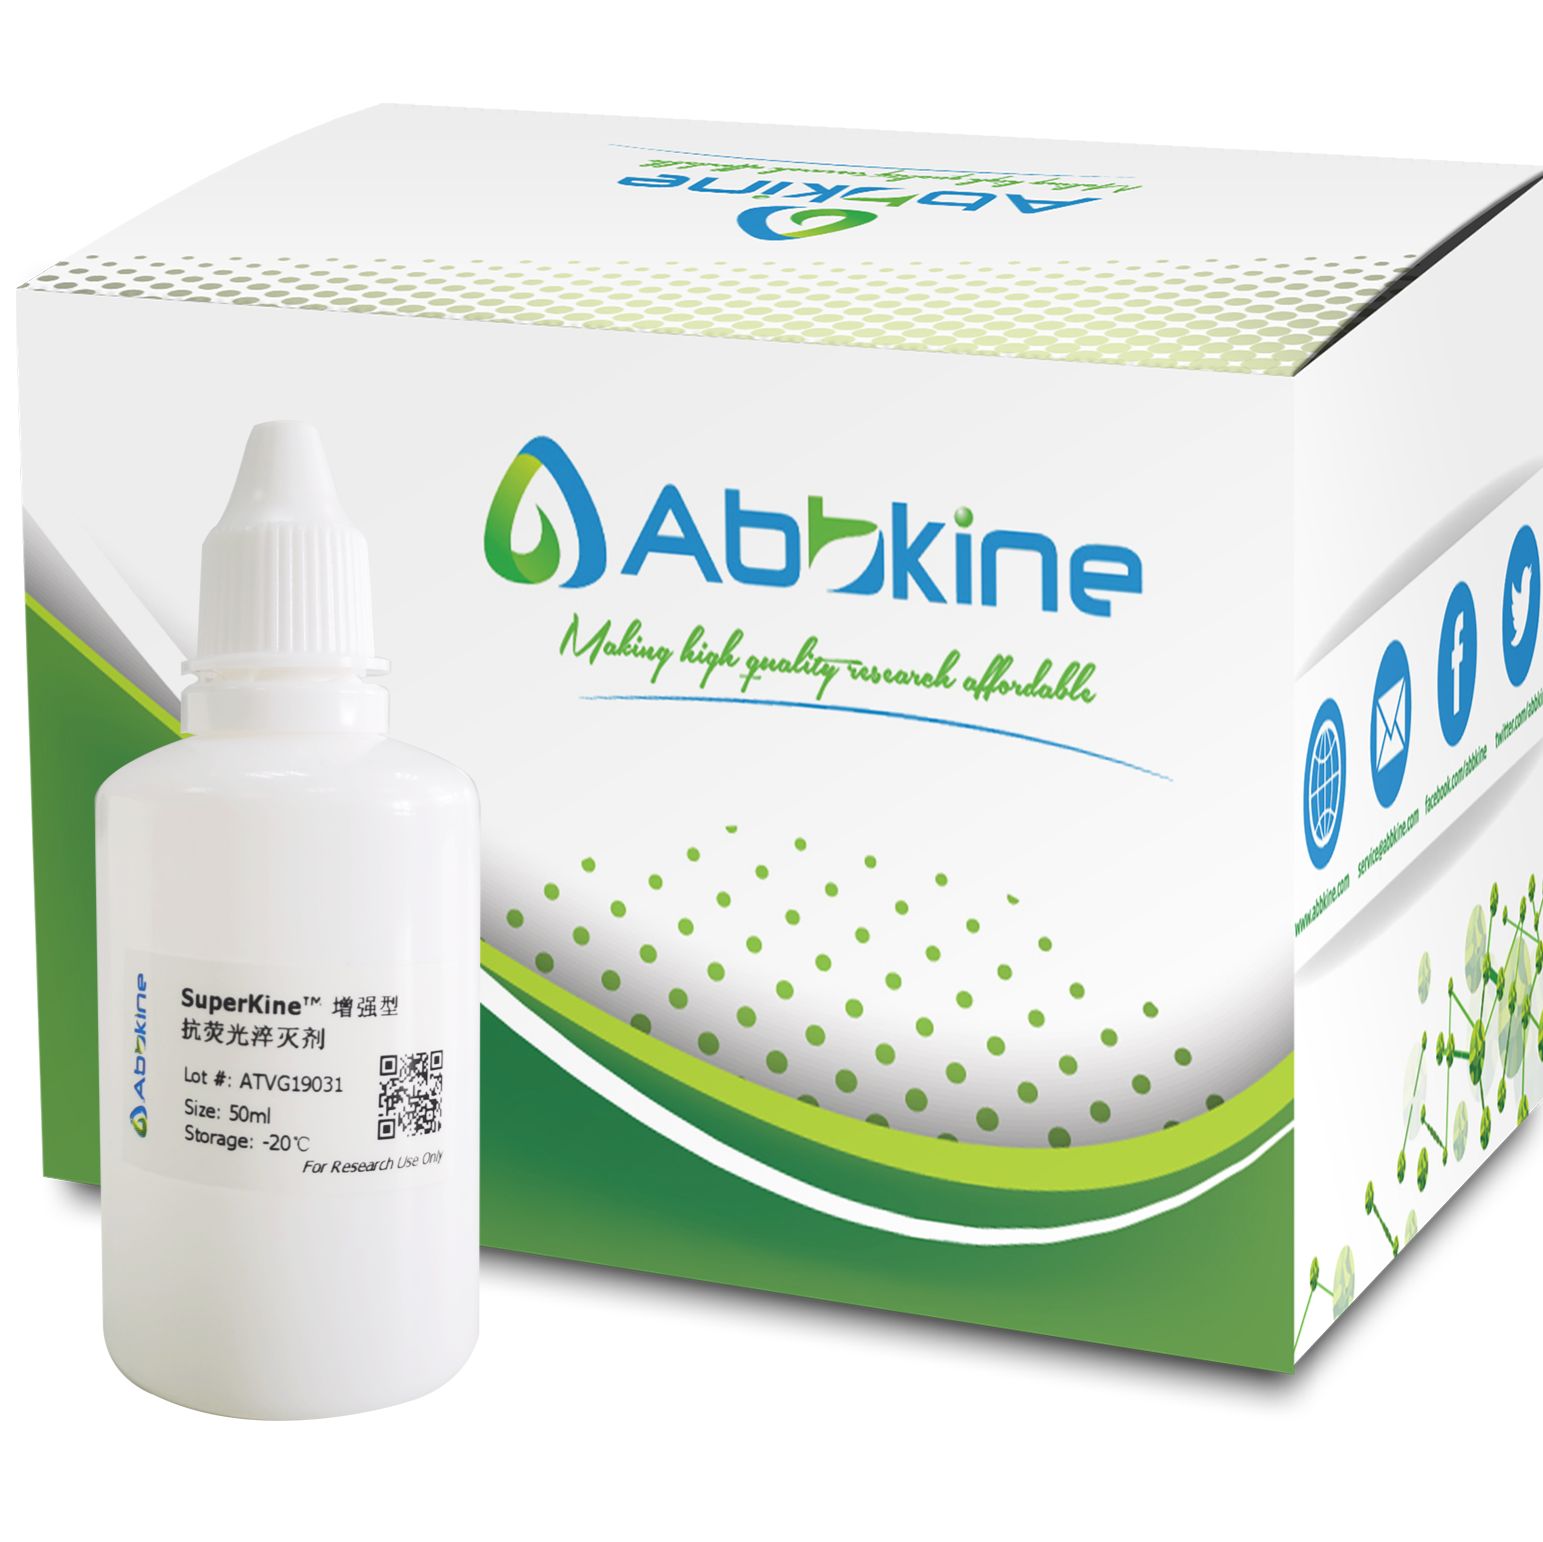 SuperKine™ 增强型抗荧光淬灭剂/SuperKine™ Enhanced Antifade Mounting Medium